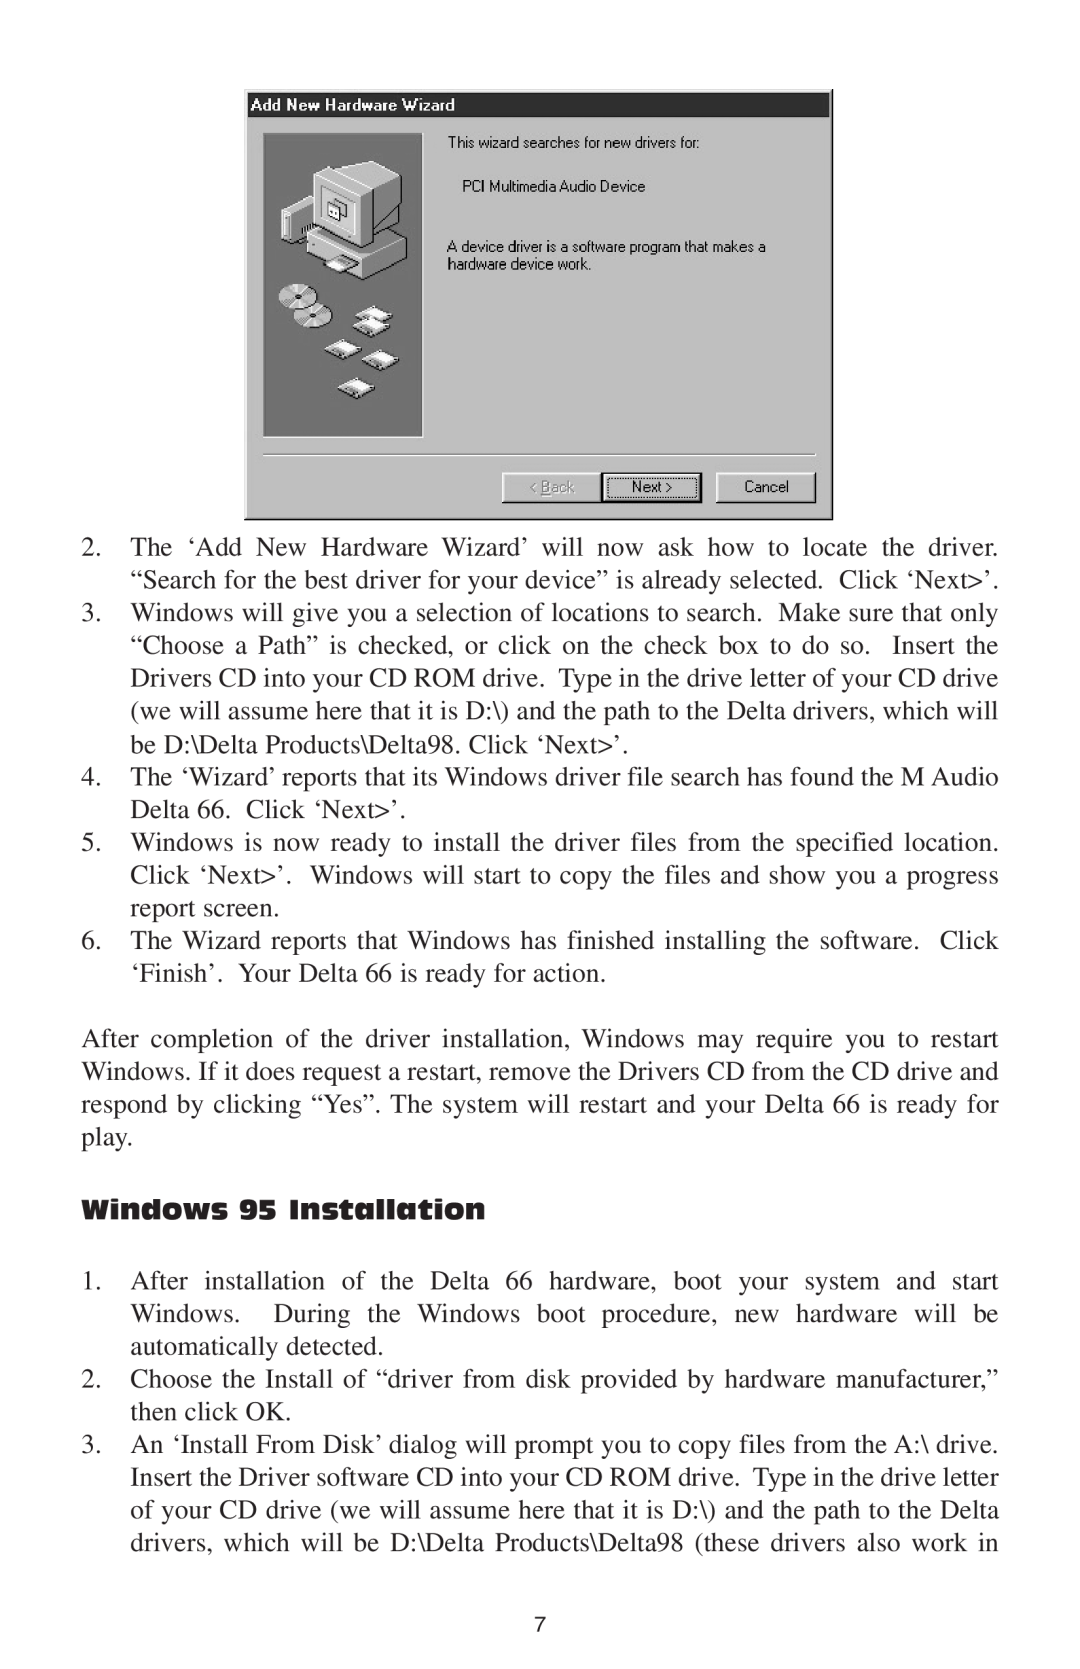 M-Audio 66 manual Windows 95 Installation 